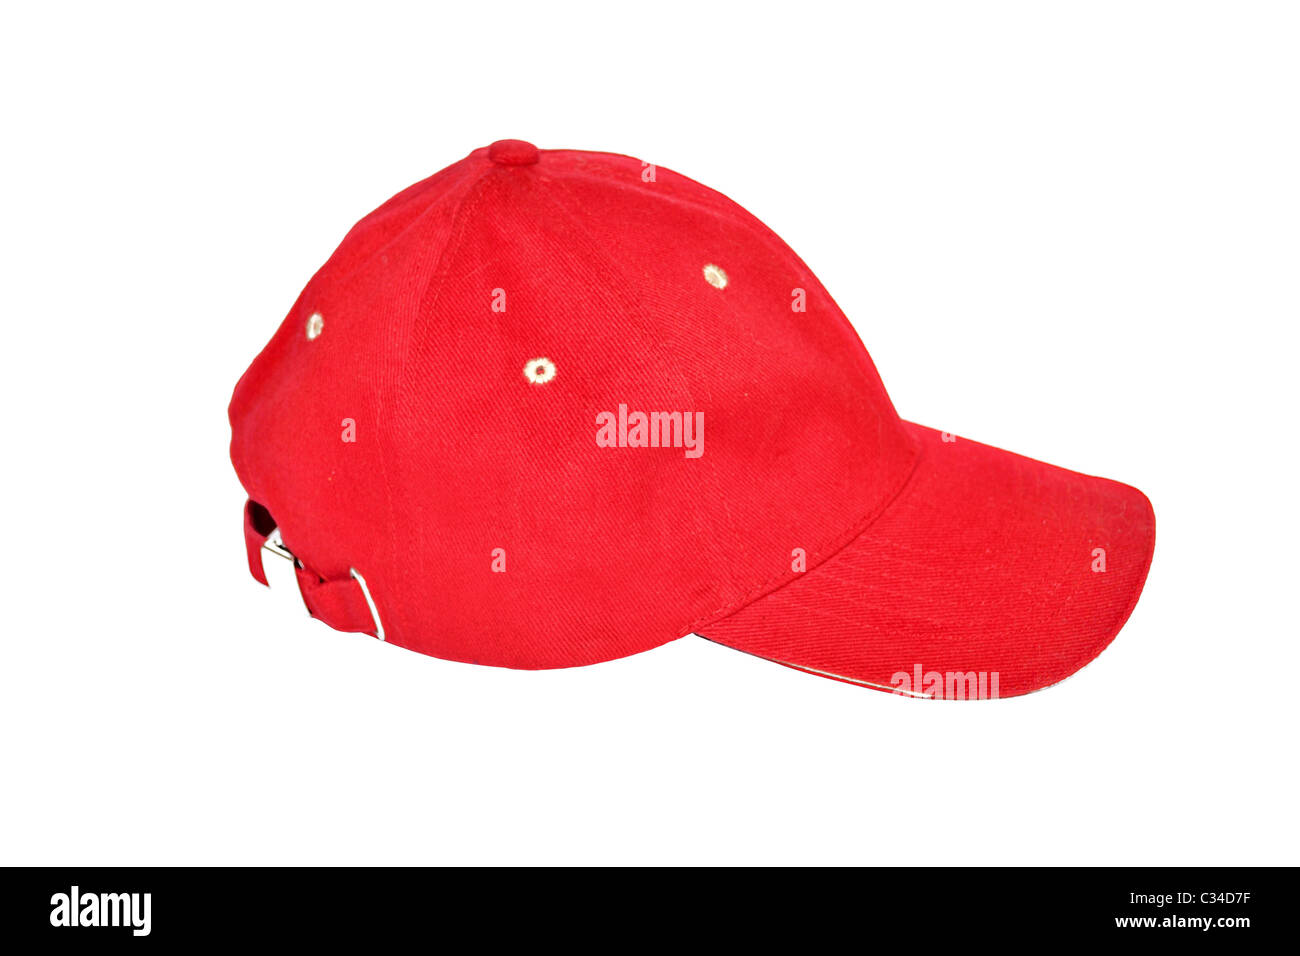 Red baseball cap Stock Photo